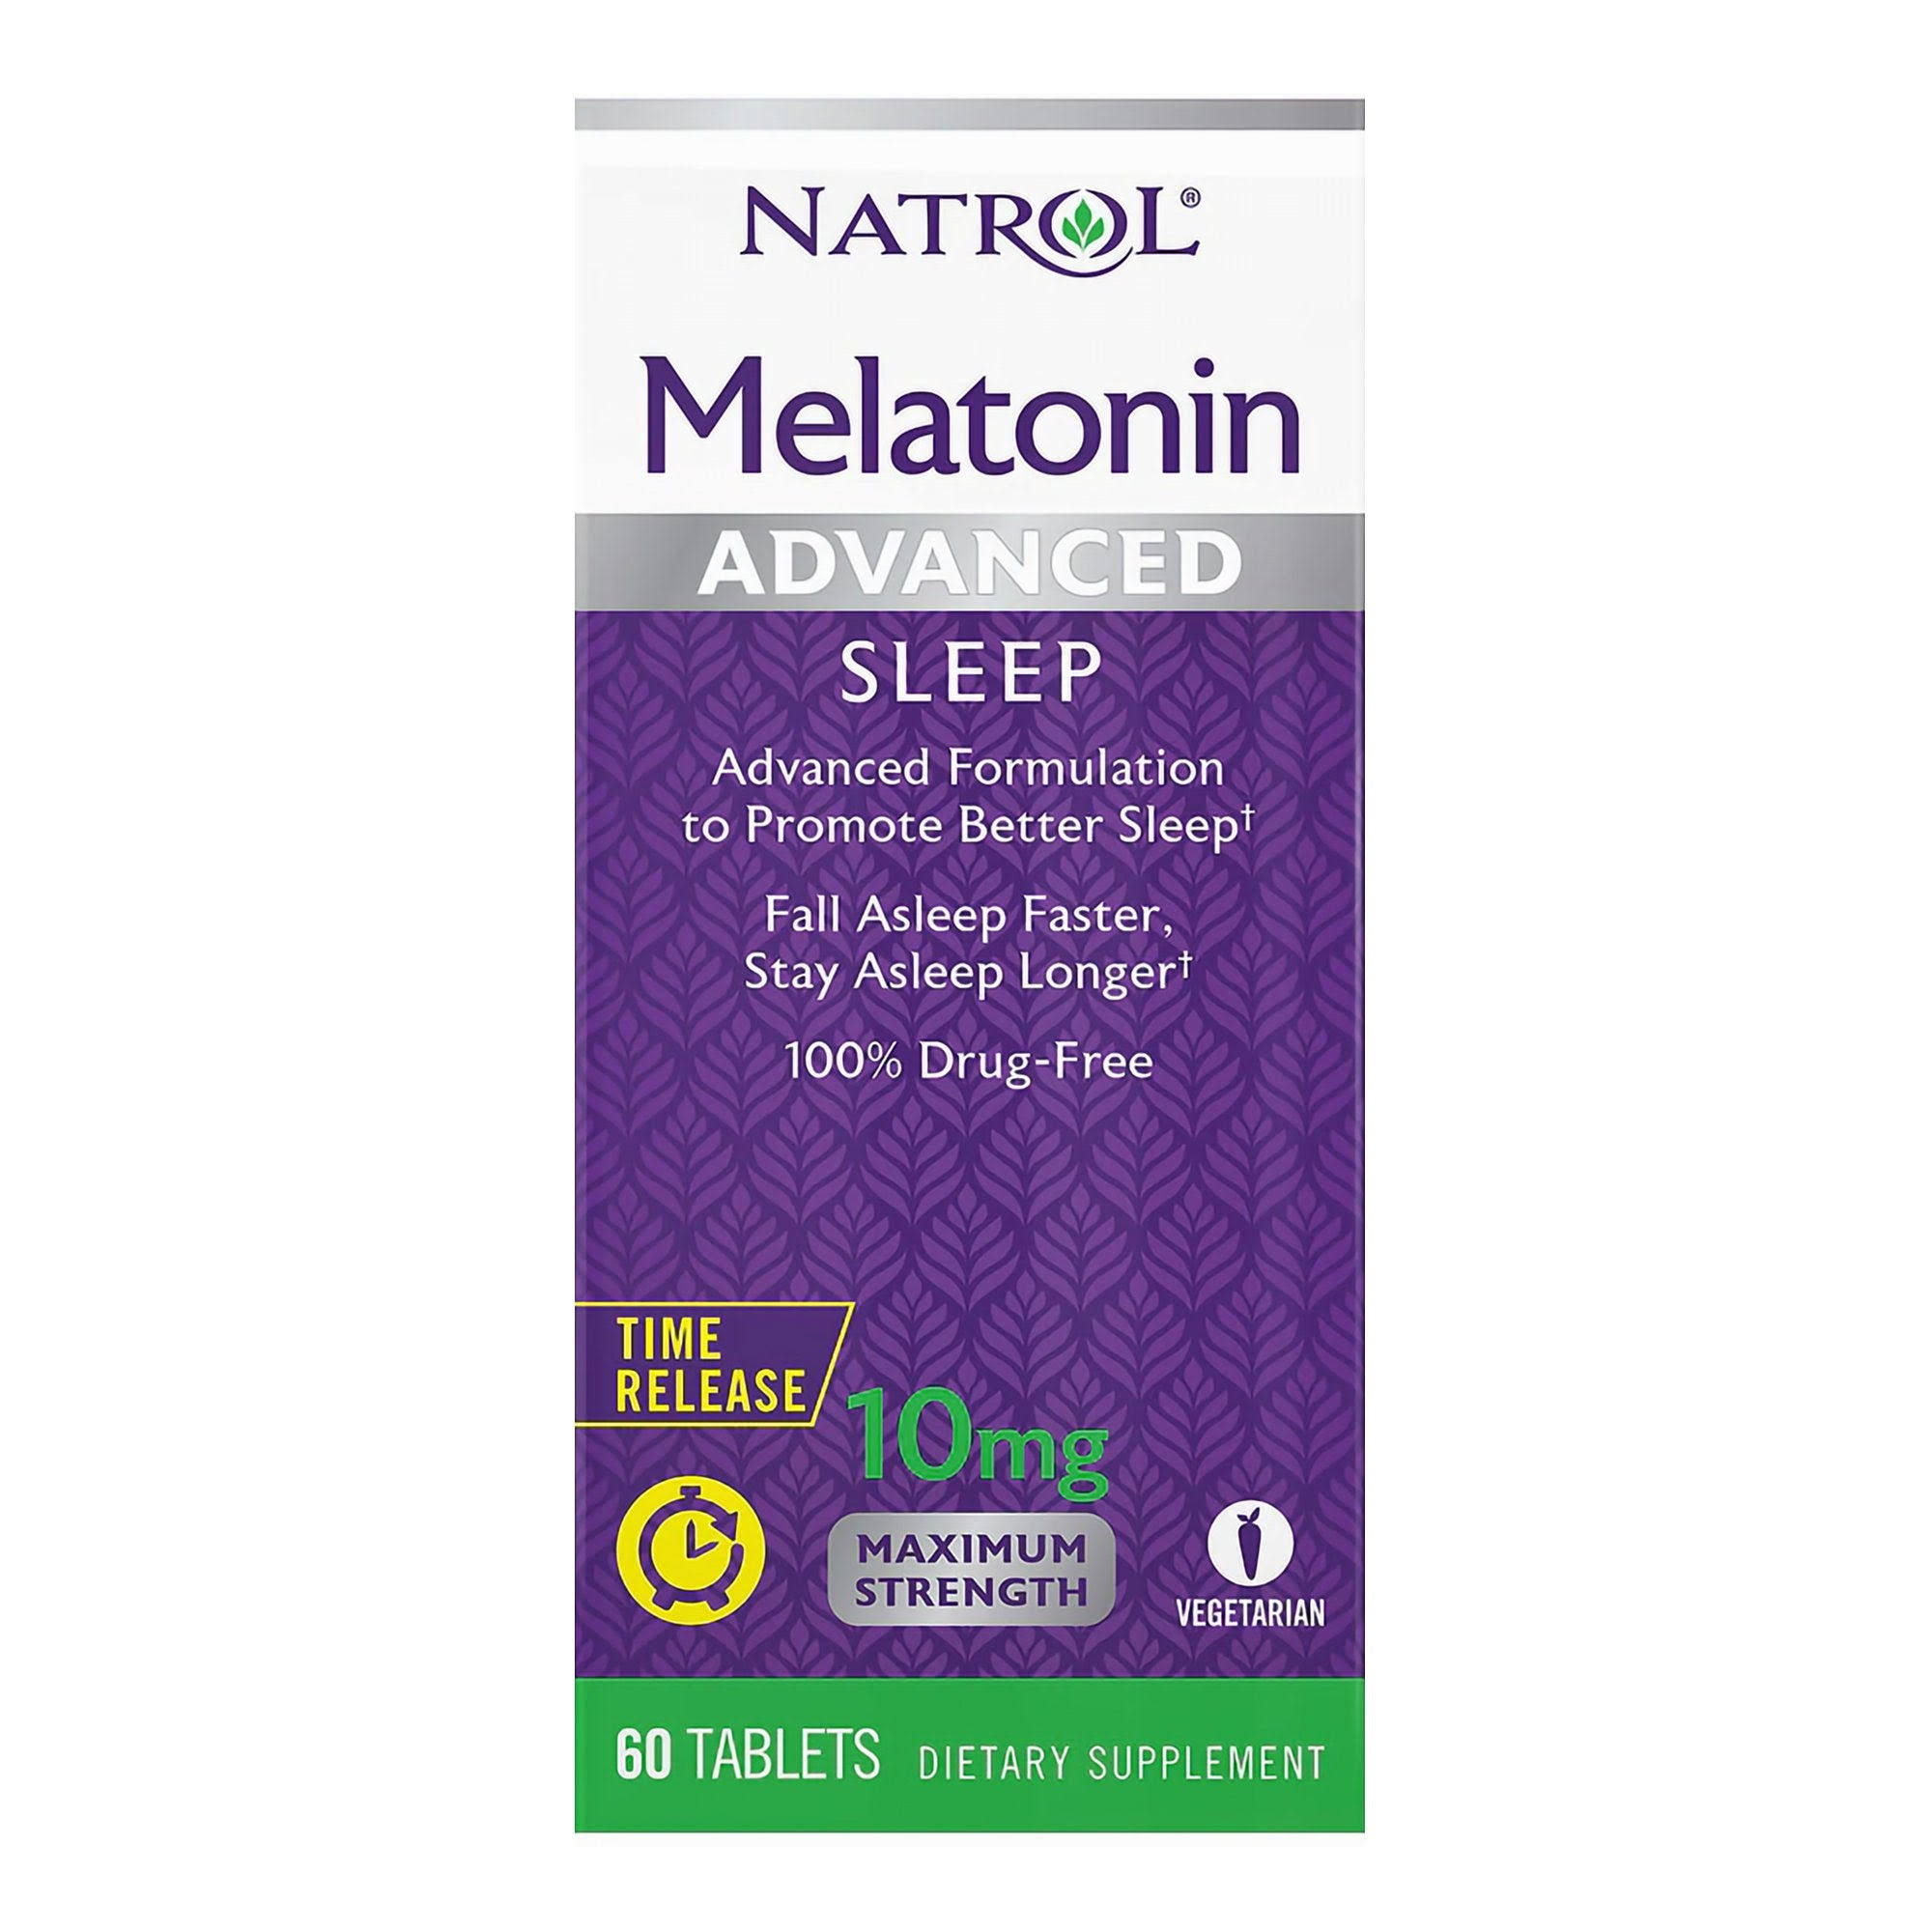 Natrol Melatonin Advanced Sleep Tablets - 60 Tablets